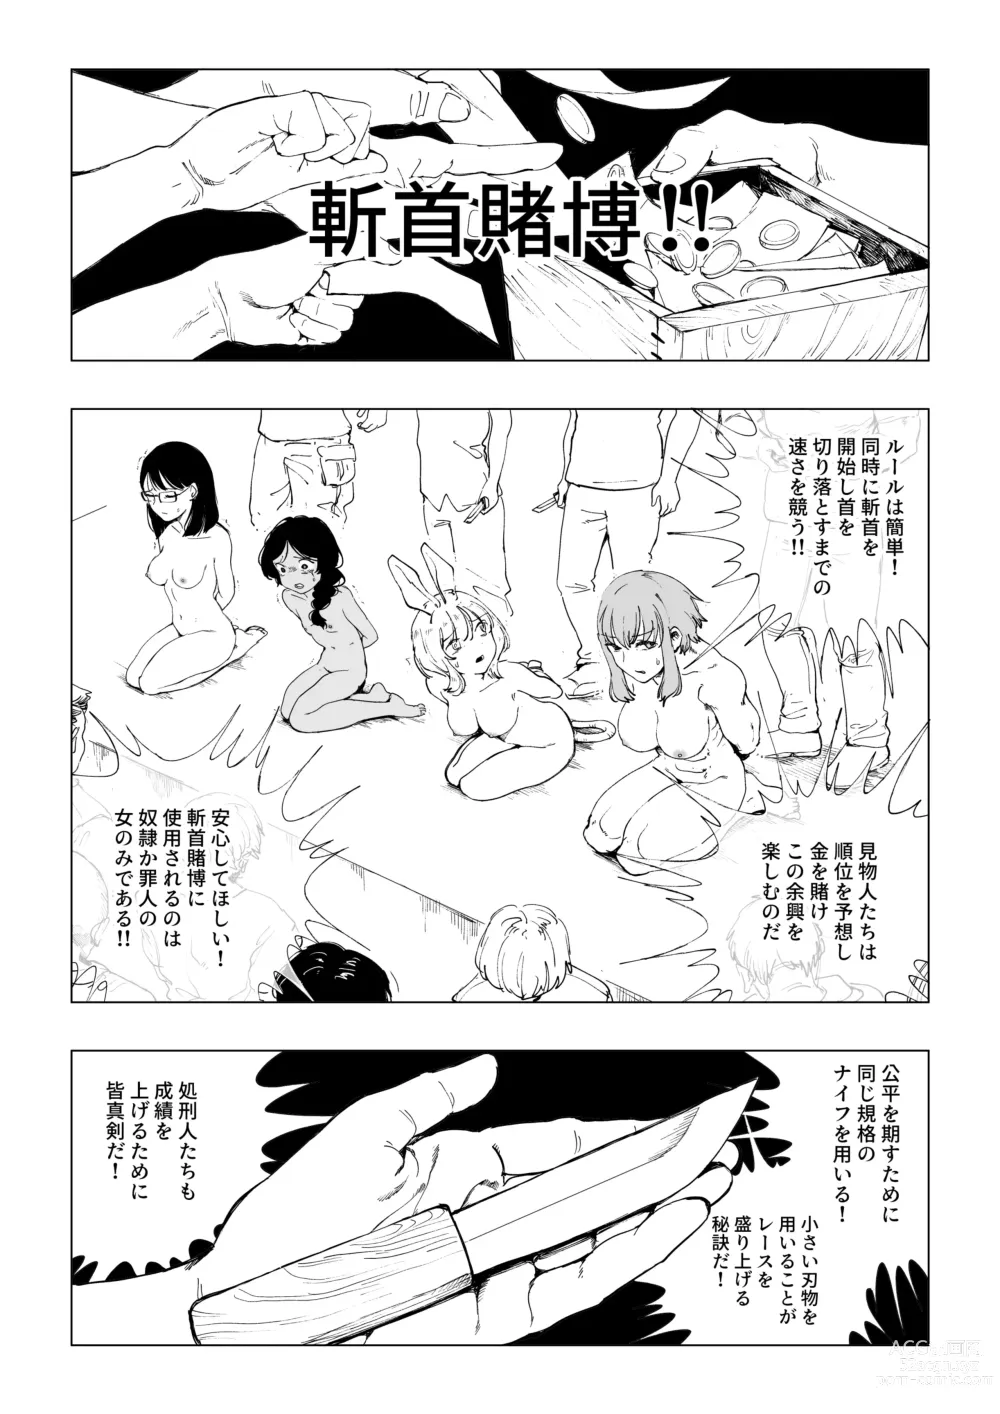 Page 2 of doujinshi Decapitation Gambling